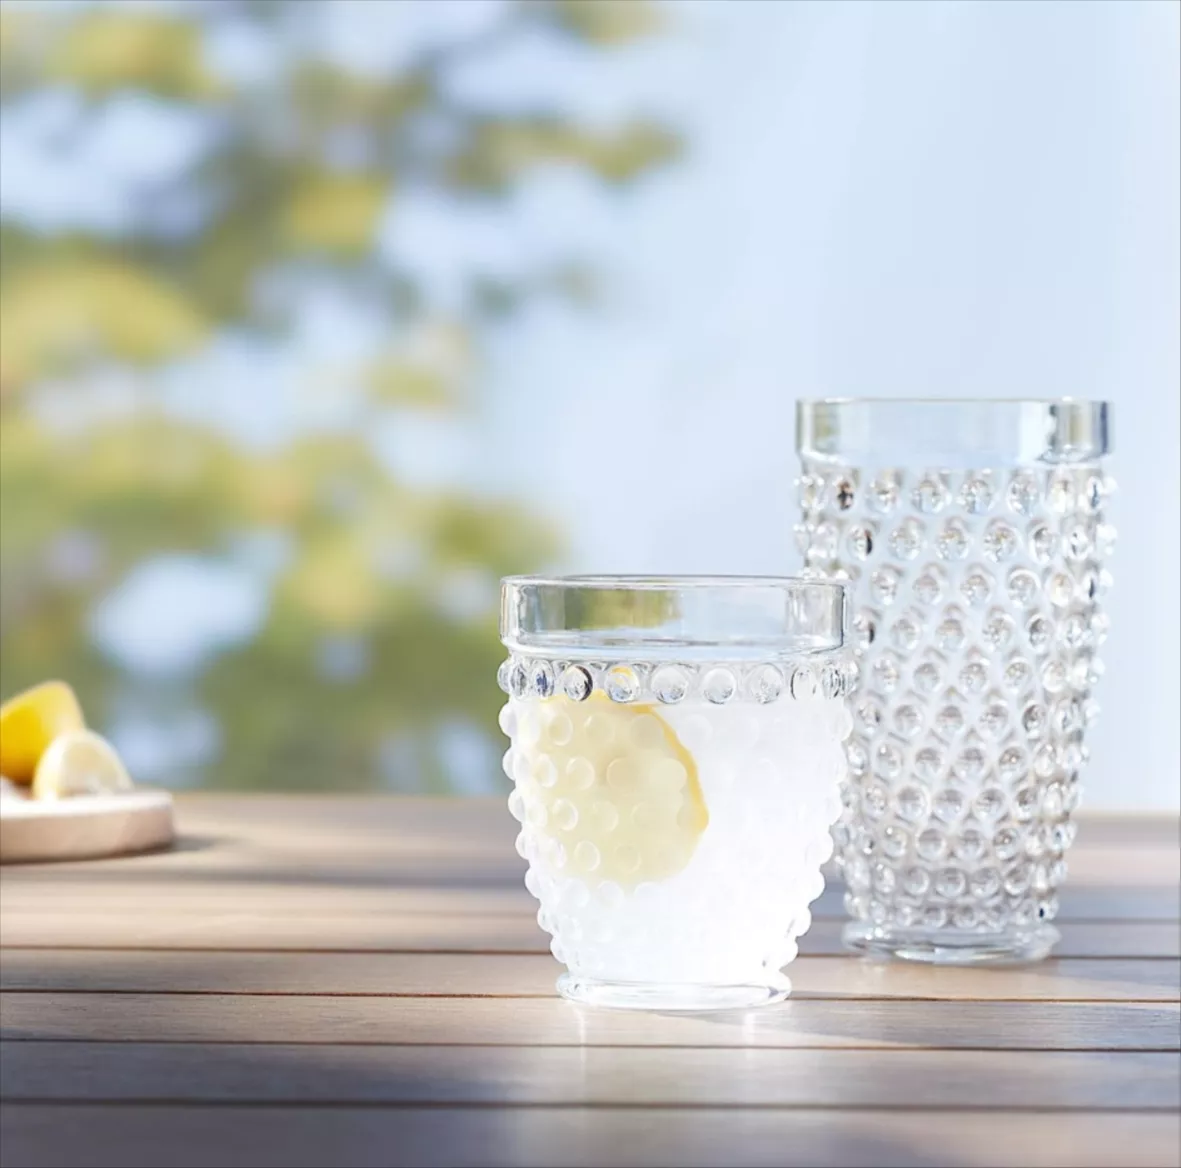 Acrylic Wine/Water Glass - Clear